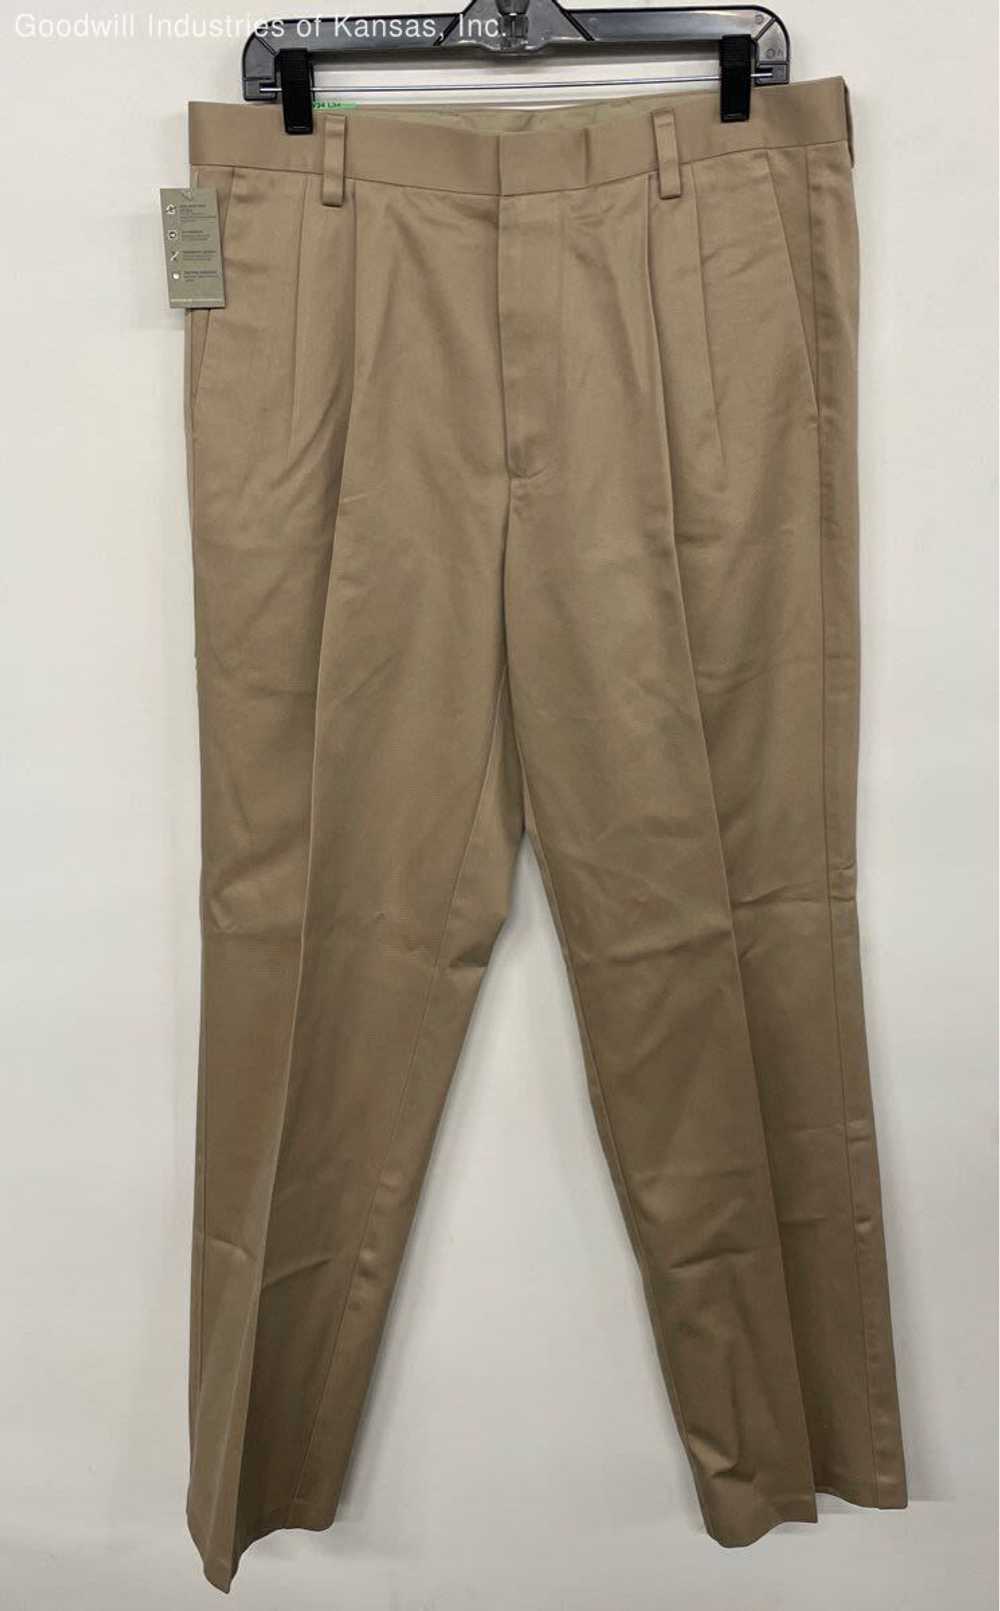 Dockers Khaki Pants - Size 34x34 - image 1